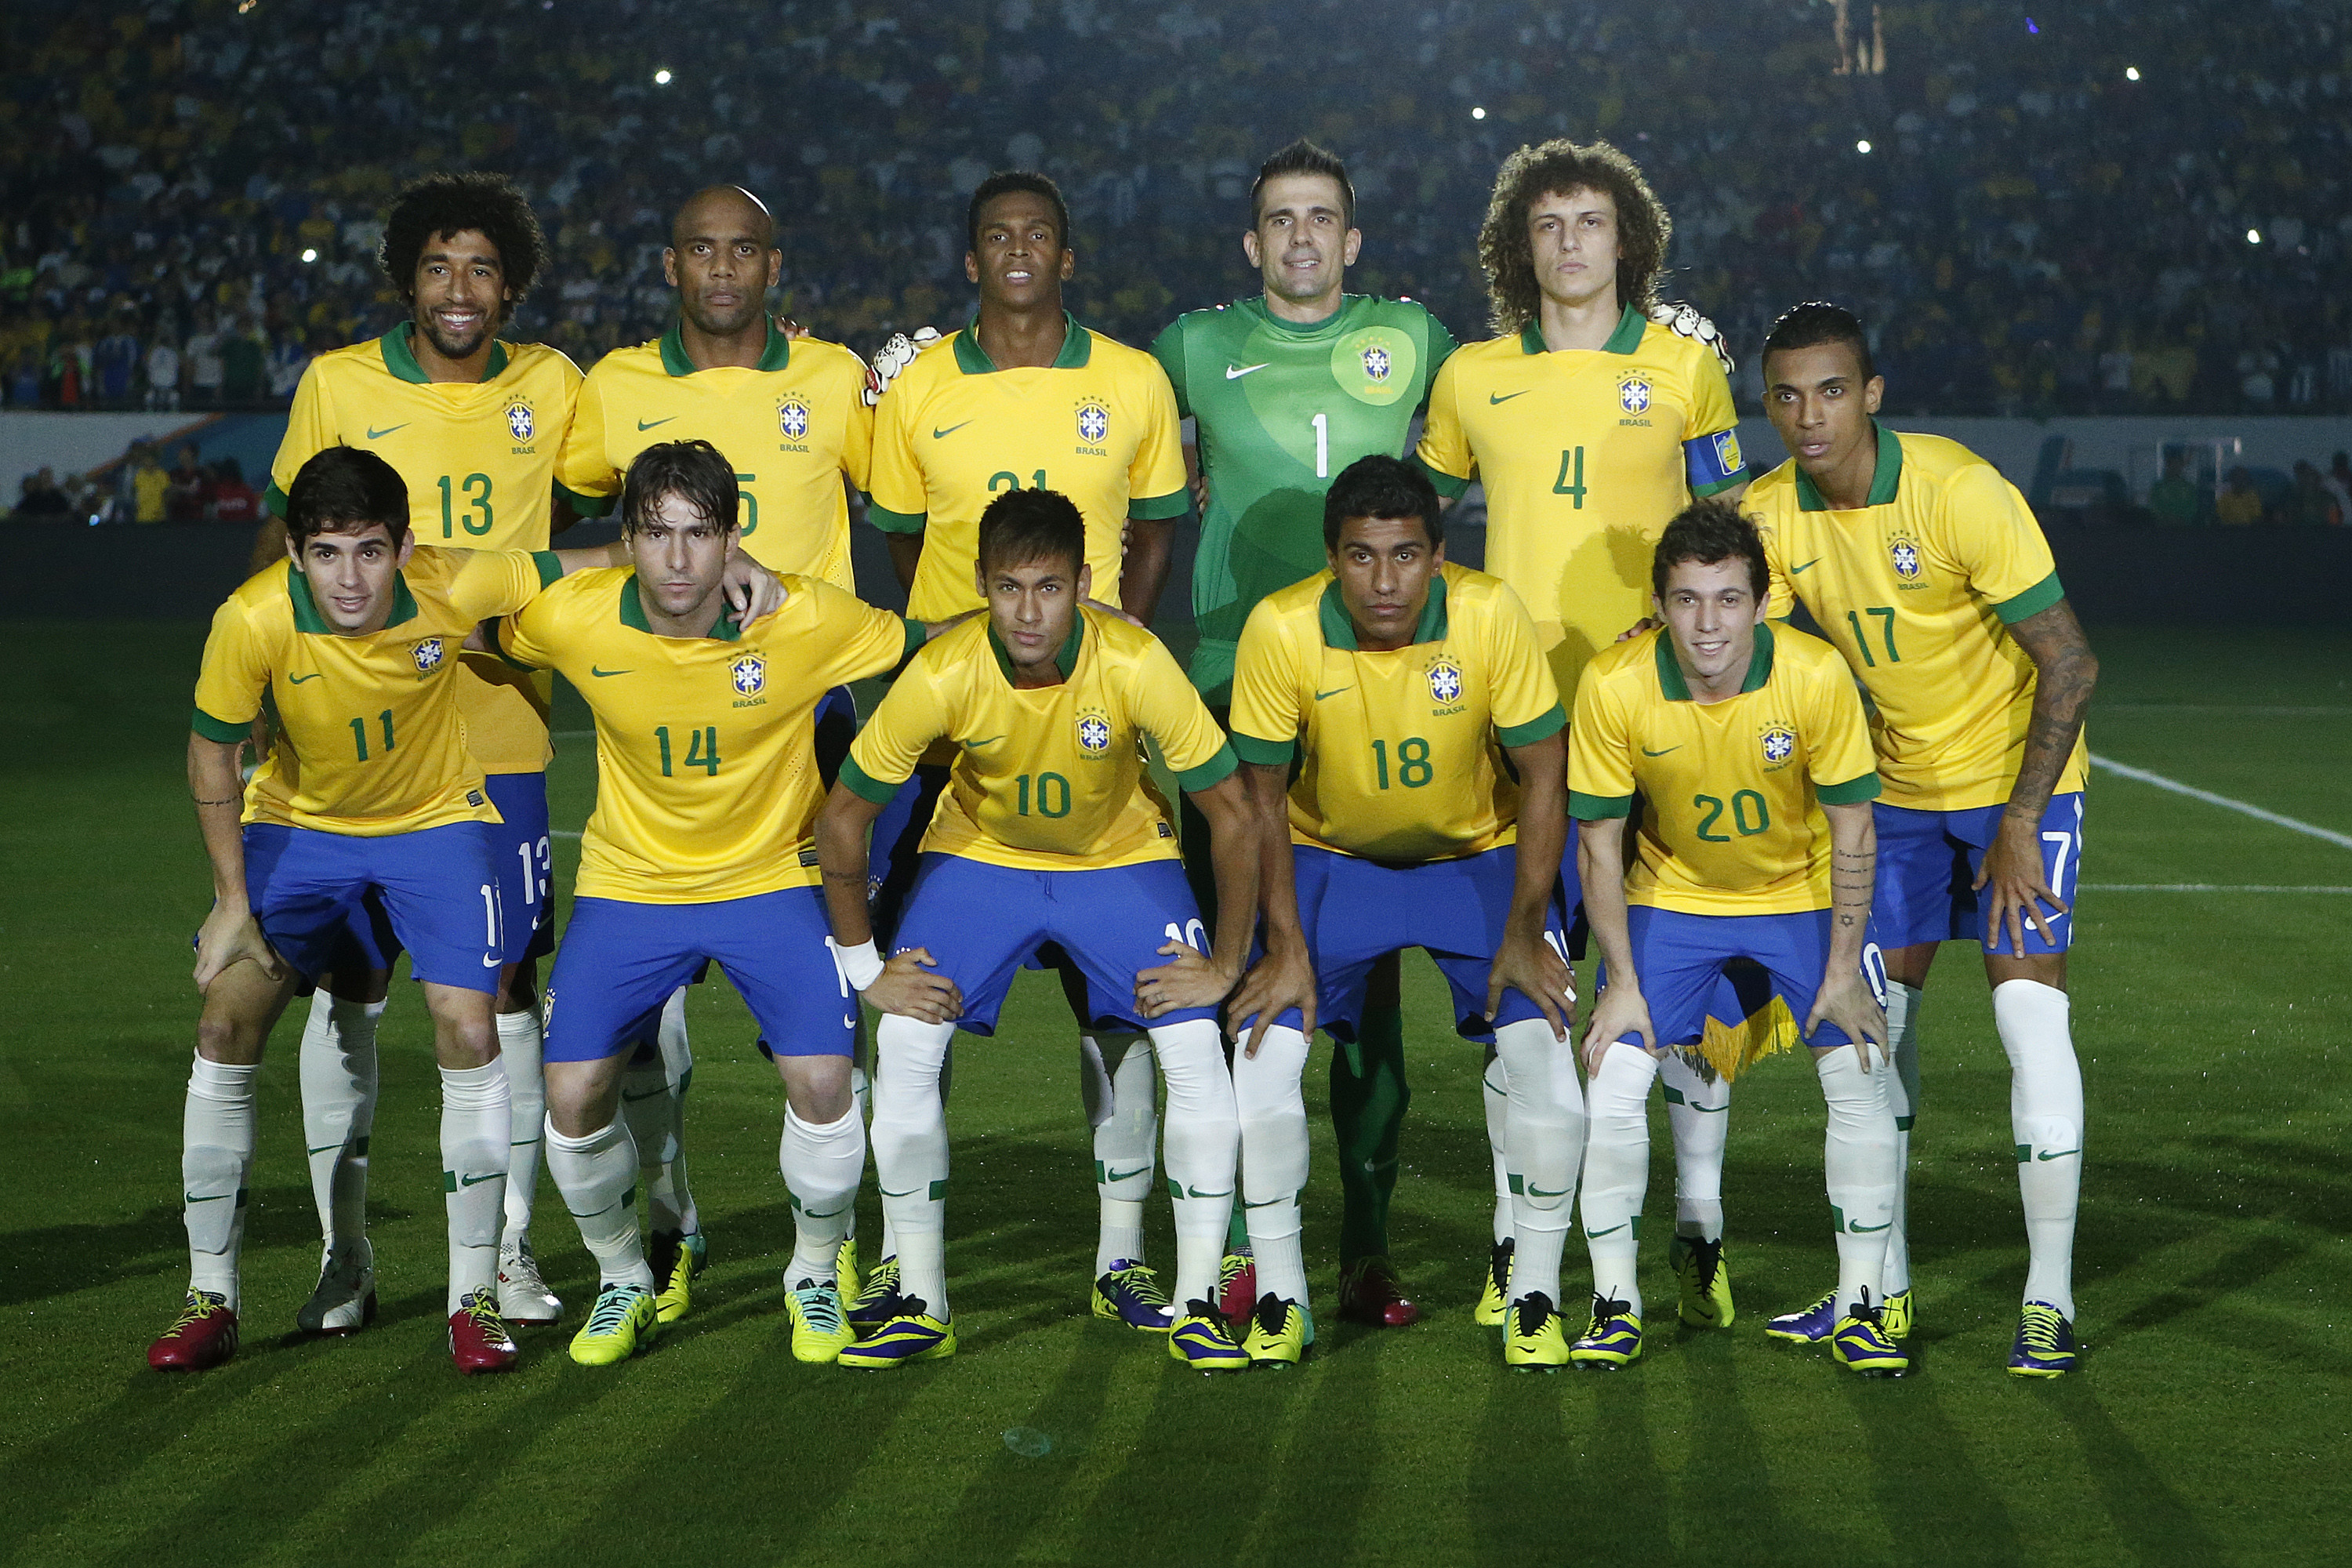 Brazilian soccer